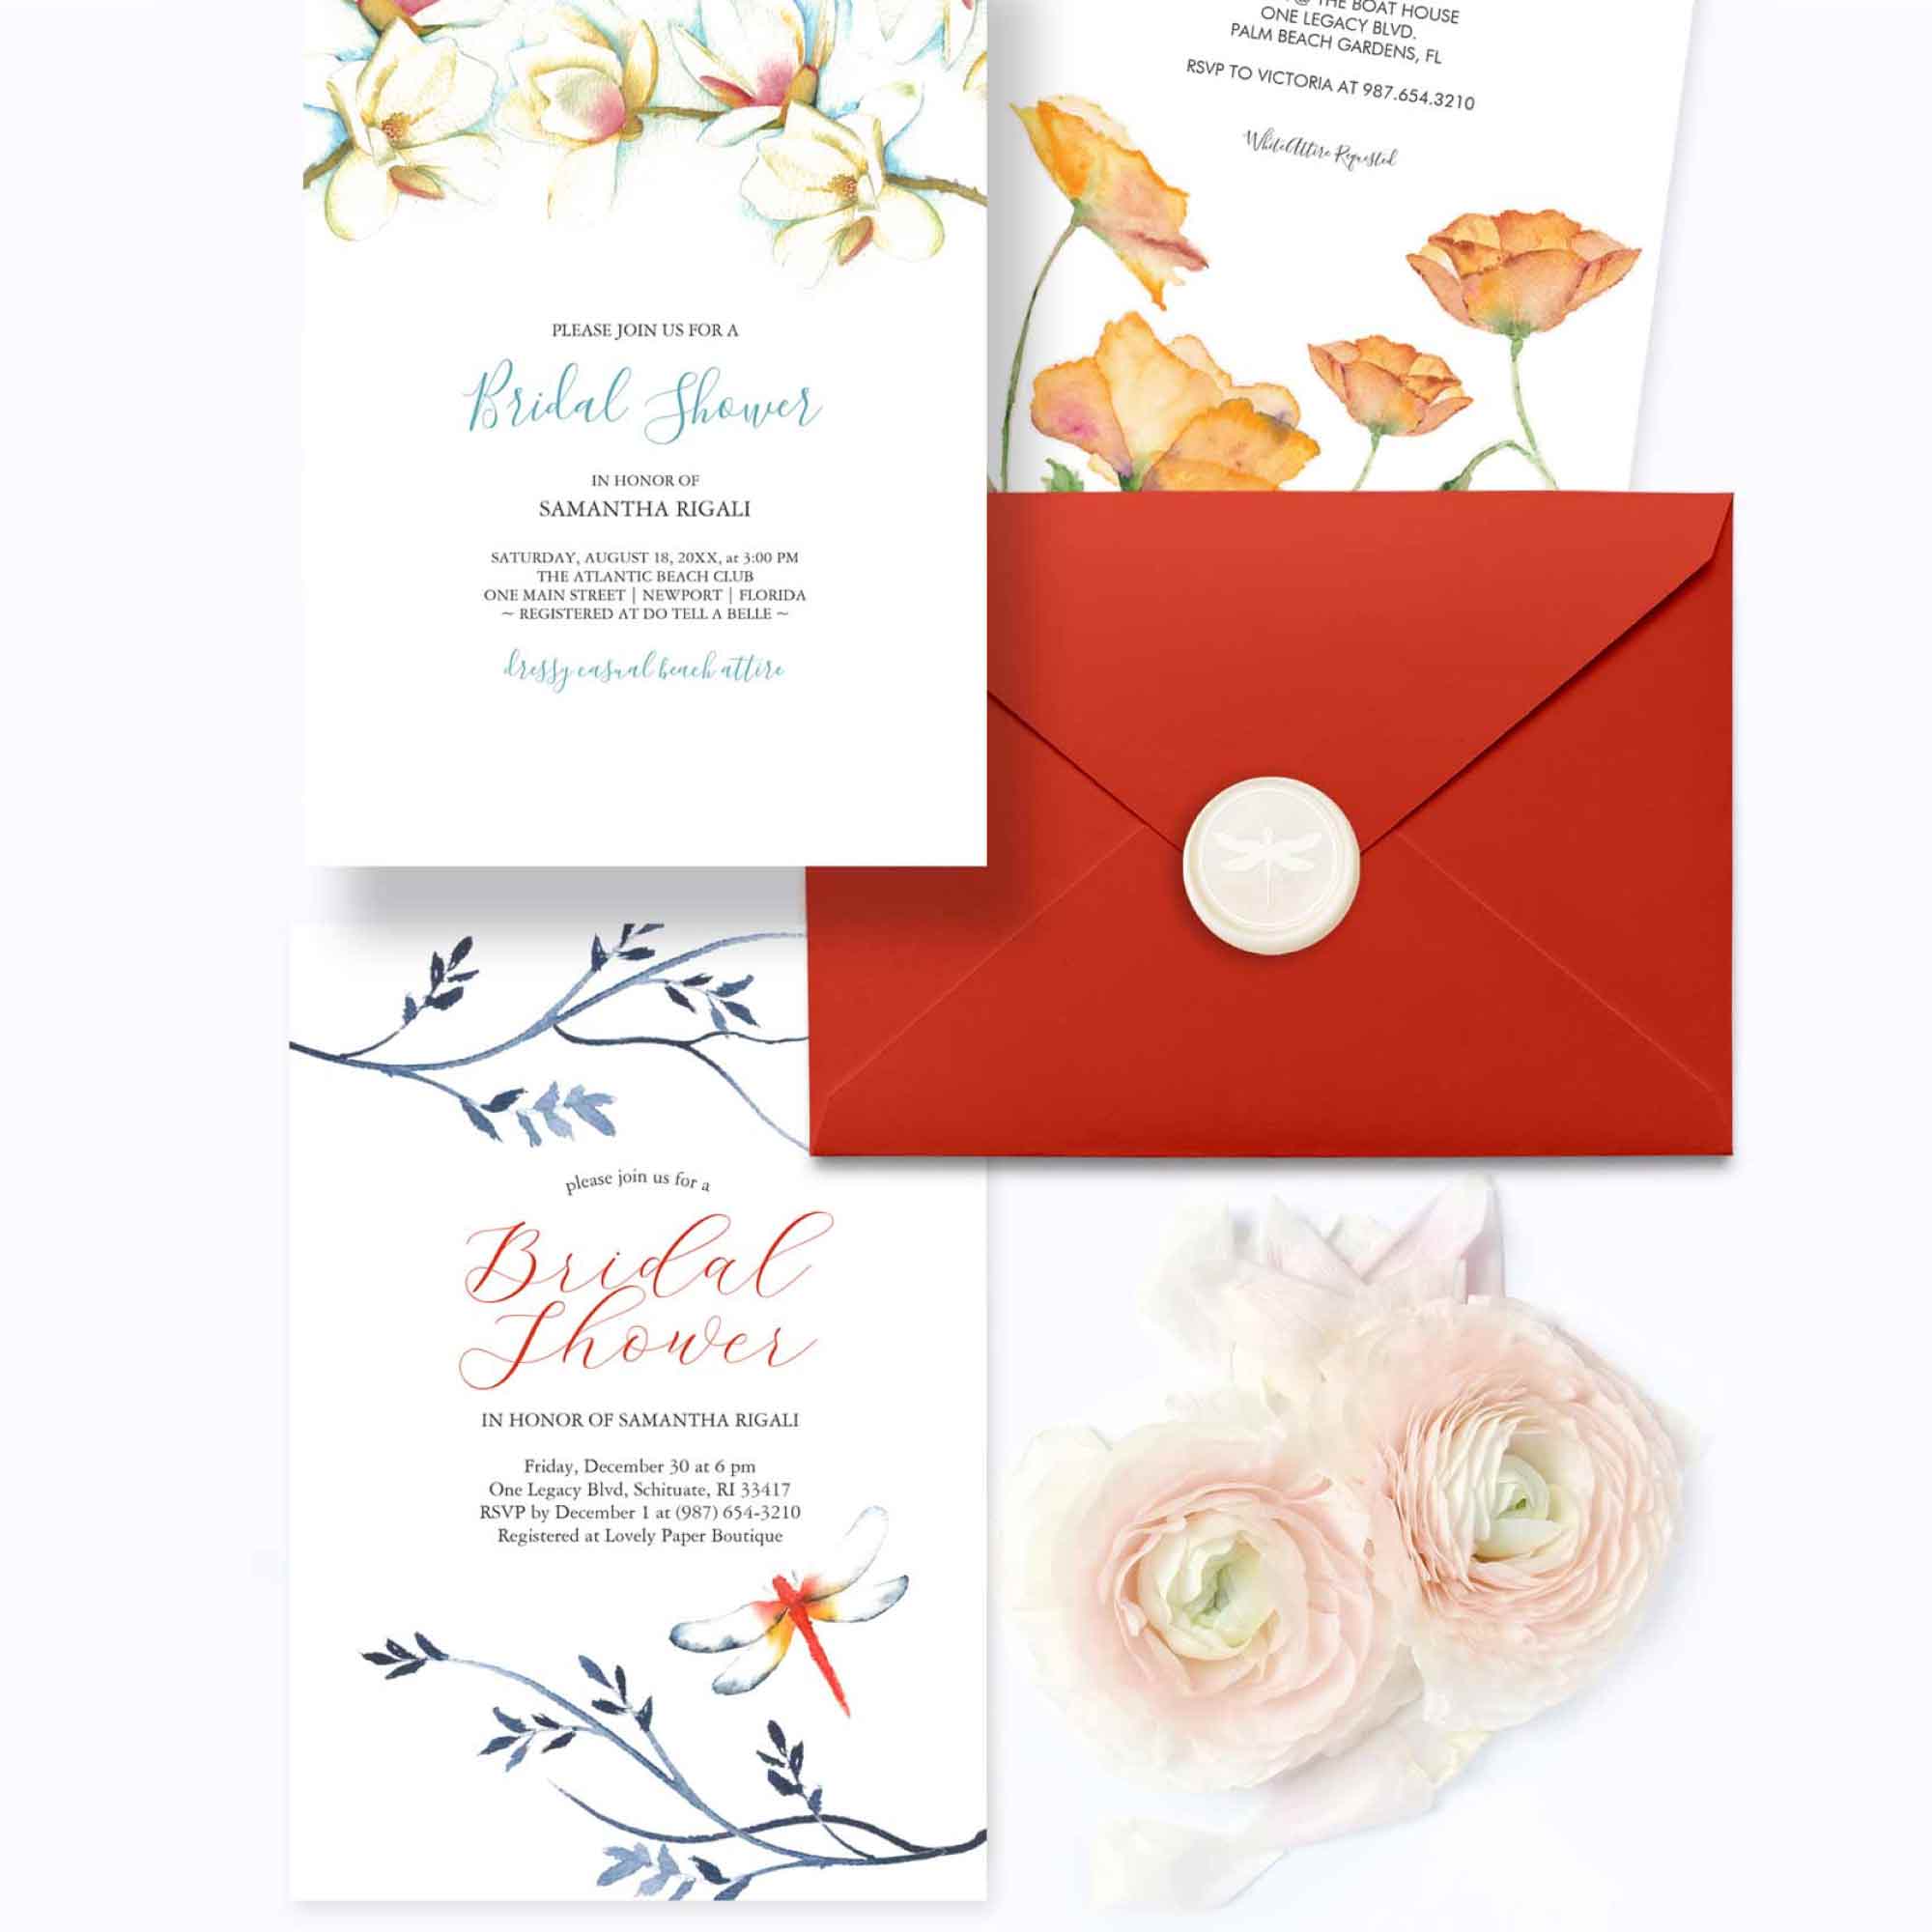 Bridal shower invitations